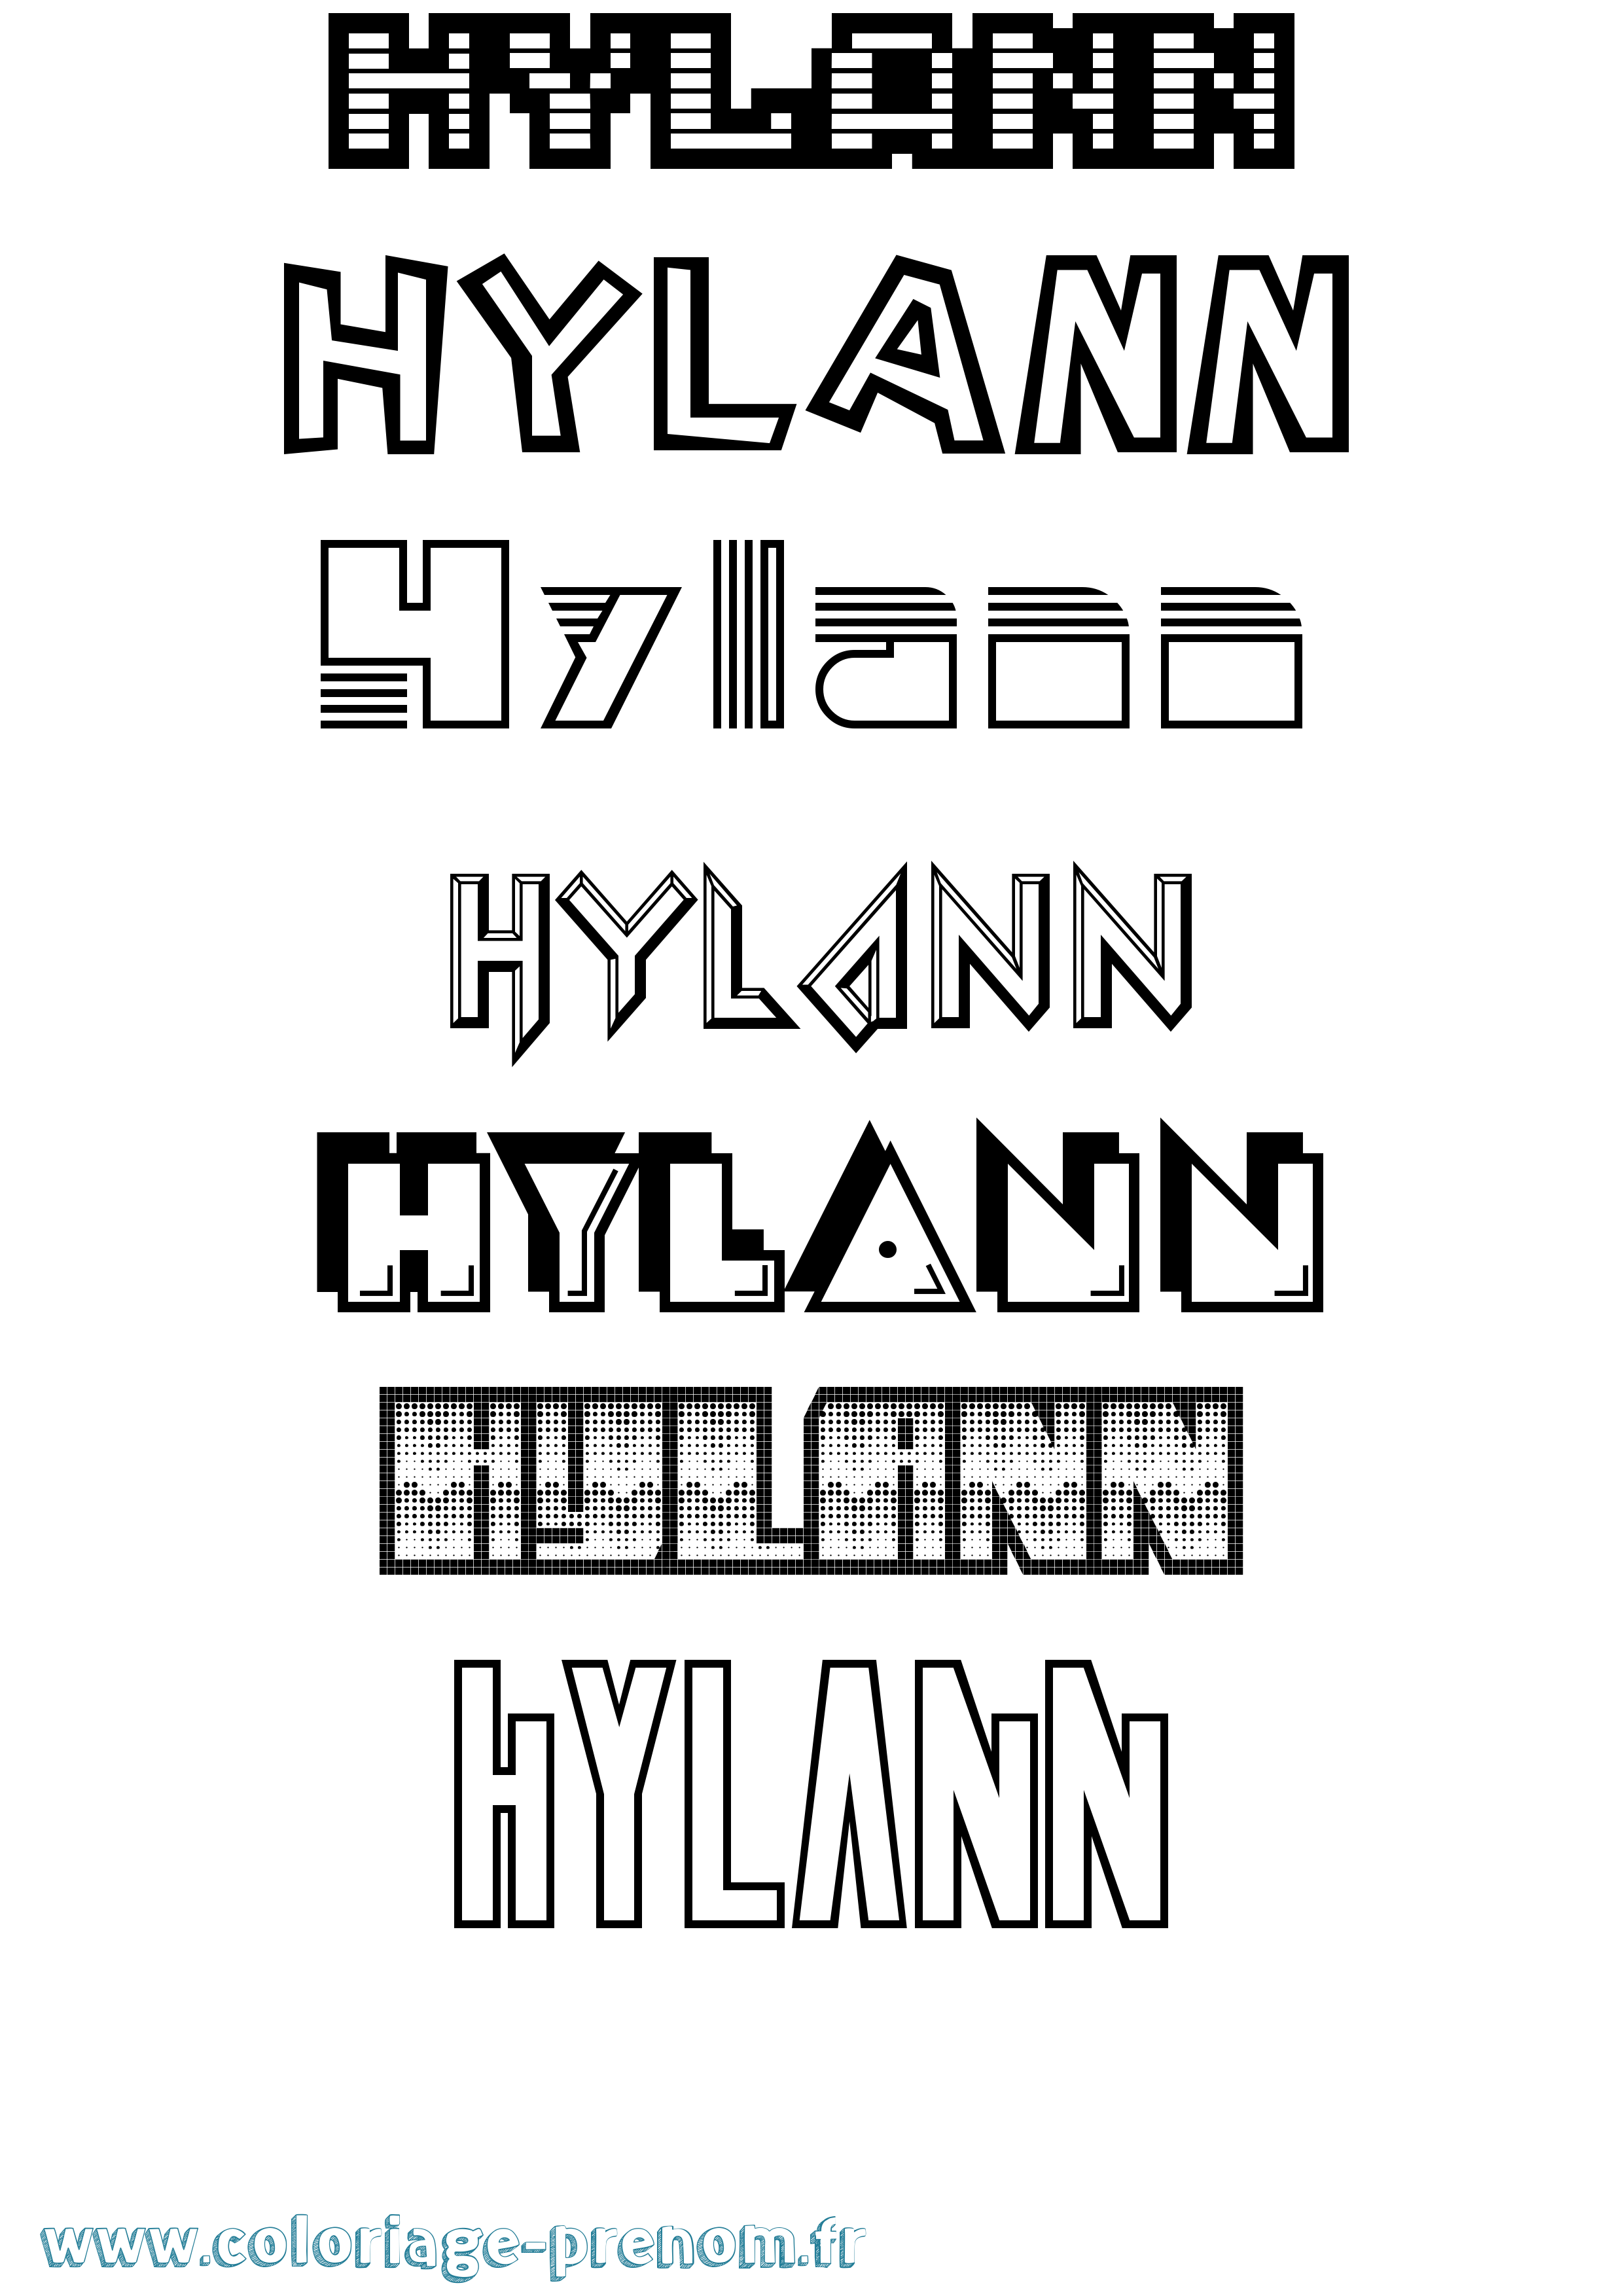 Coloriage prénom Hylann Jeux Vidéos